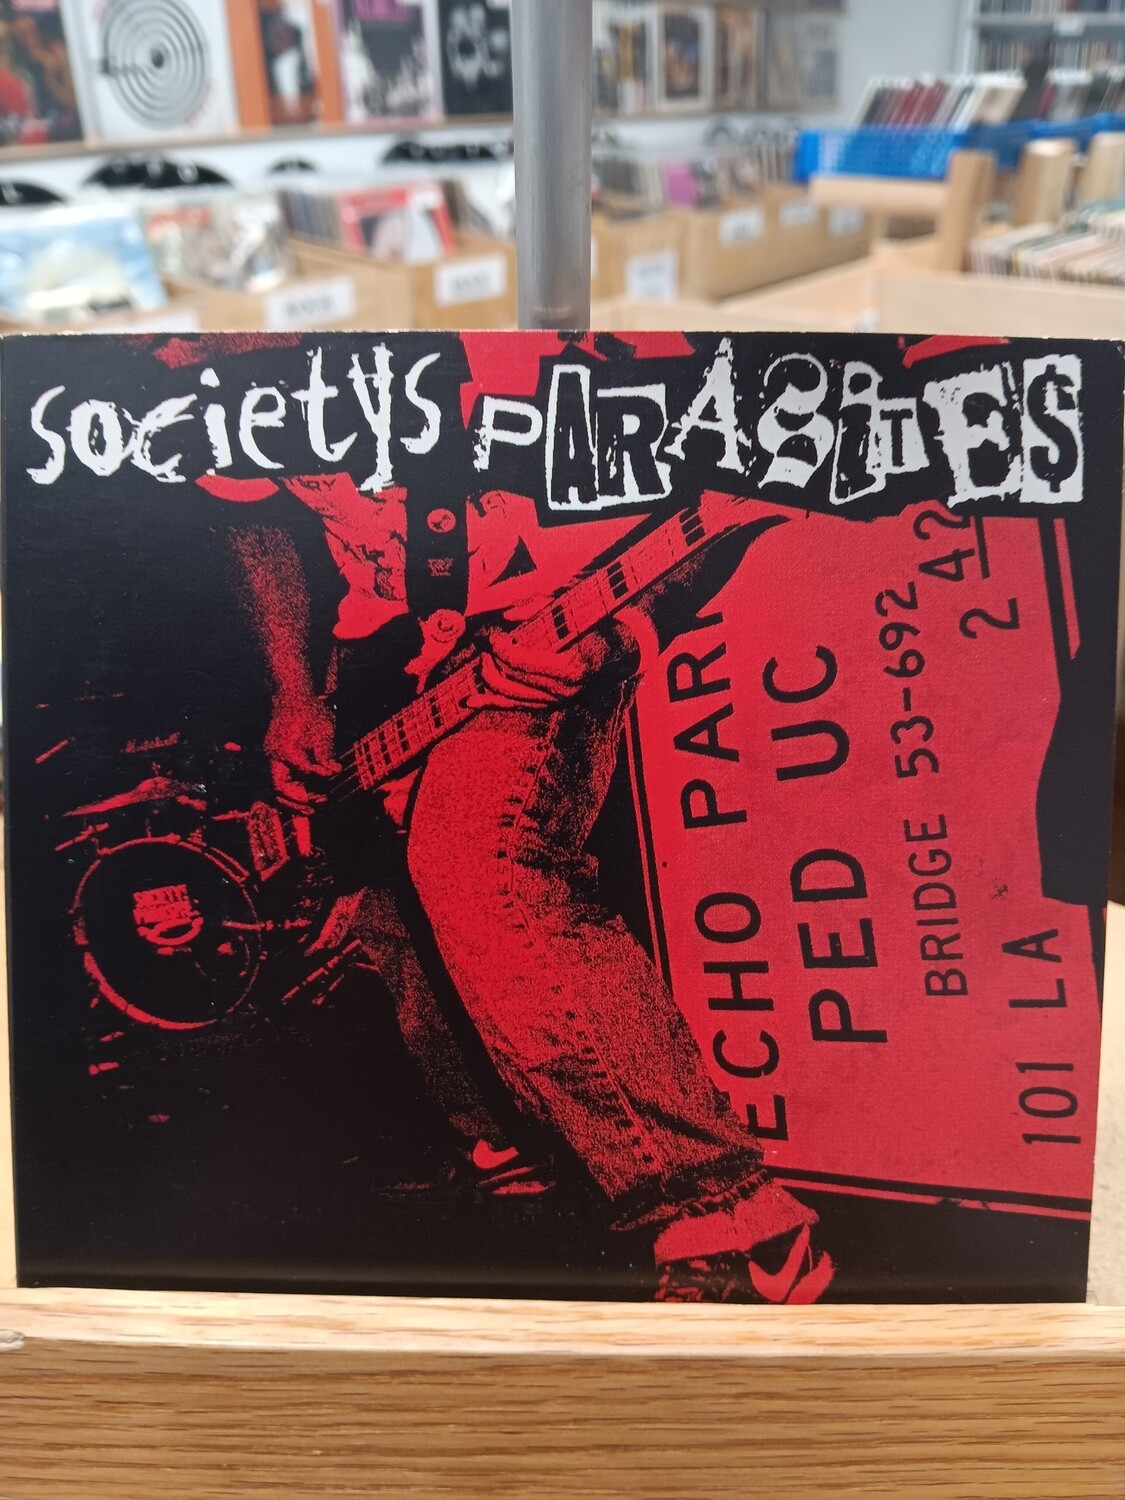 SOCIETYS PARASITES - Societys Parasites (CD)